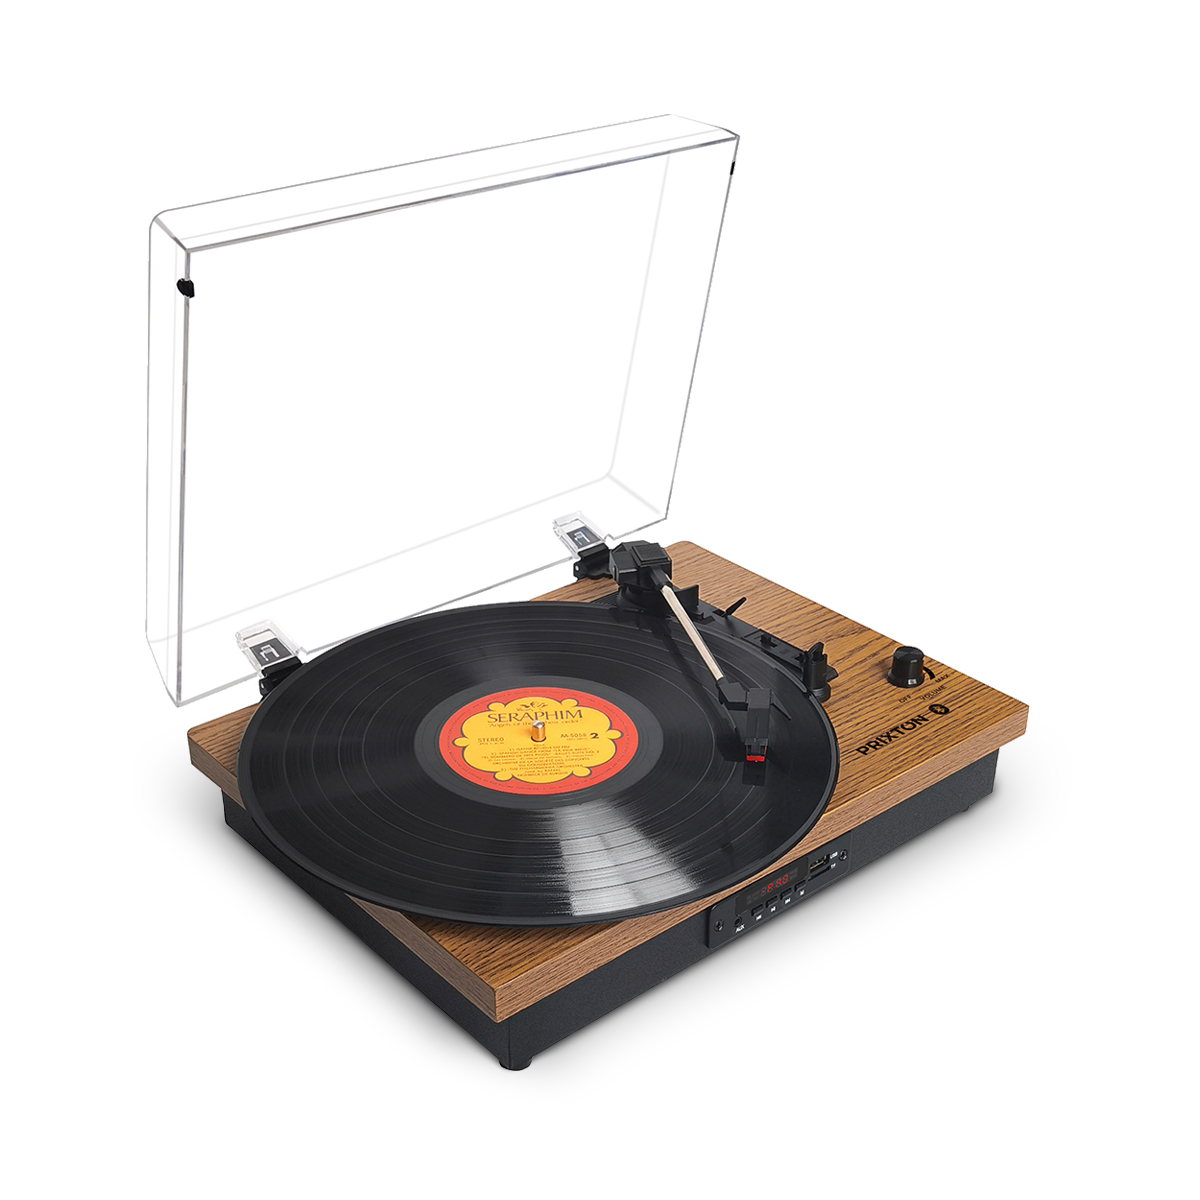 PRIXTON Studio Vinyl-Plattenspieler Bluetooth, UKW-Radio, Jack3.5mm, Vinyl, SD.Karte, Holz